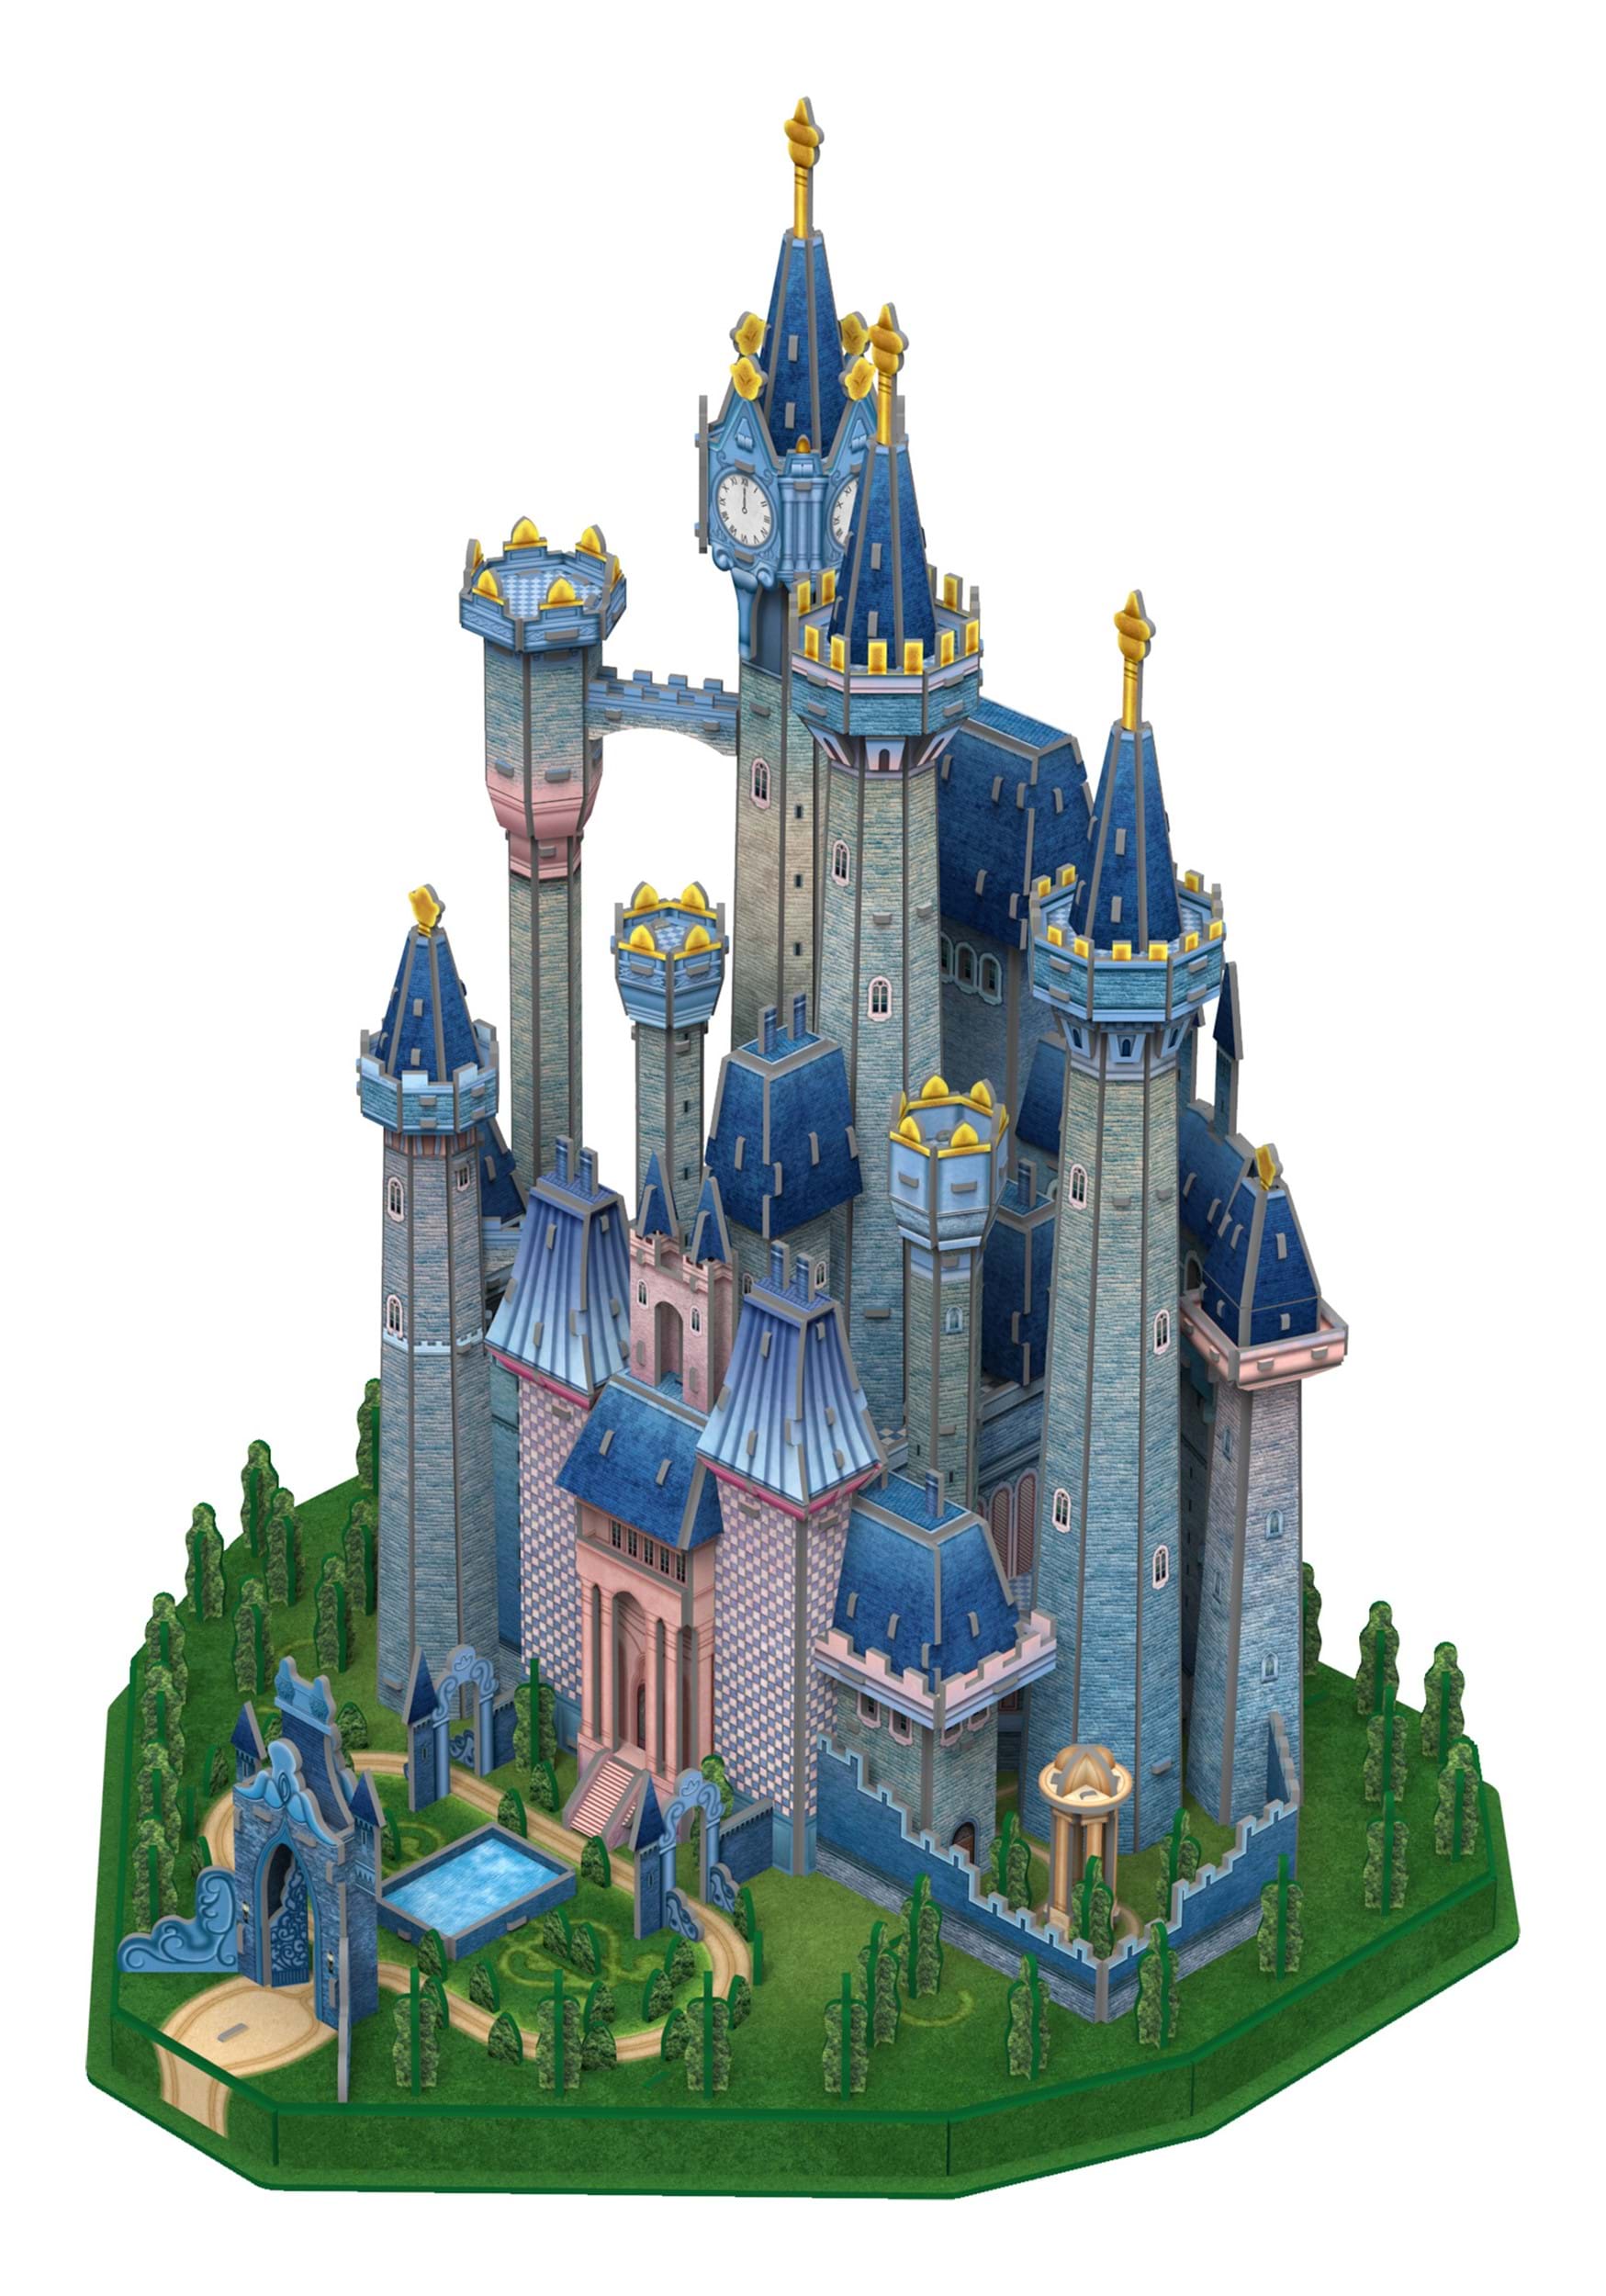 3D Disney Cinderella Castle Puzzle | Disney Gifts